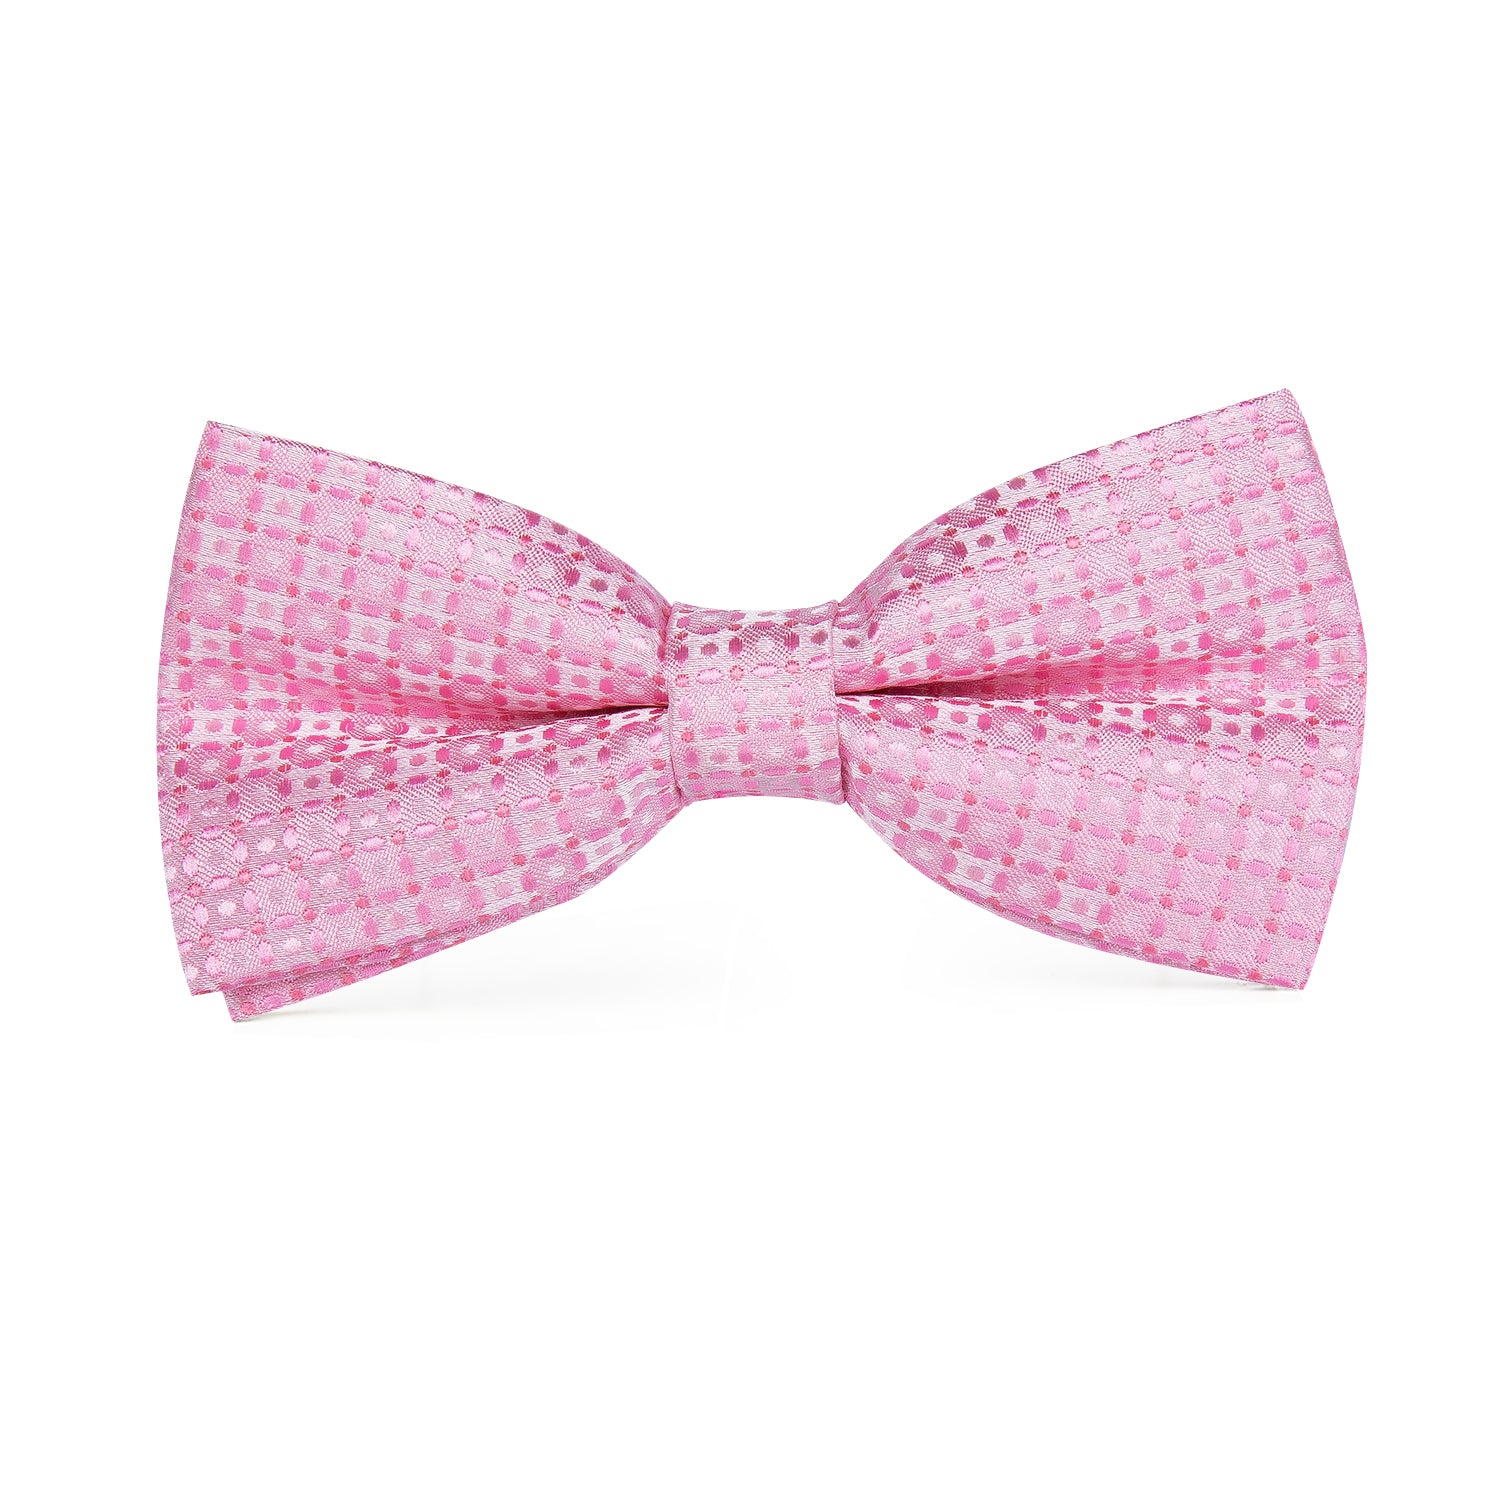 Pink Novelty Pre-tied Bow Tie Hanky Cufflinks Set